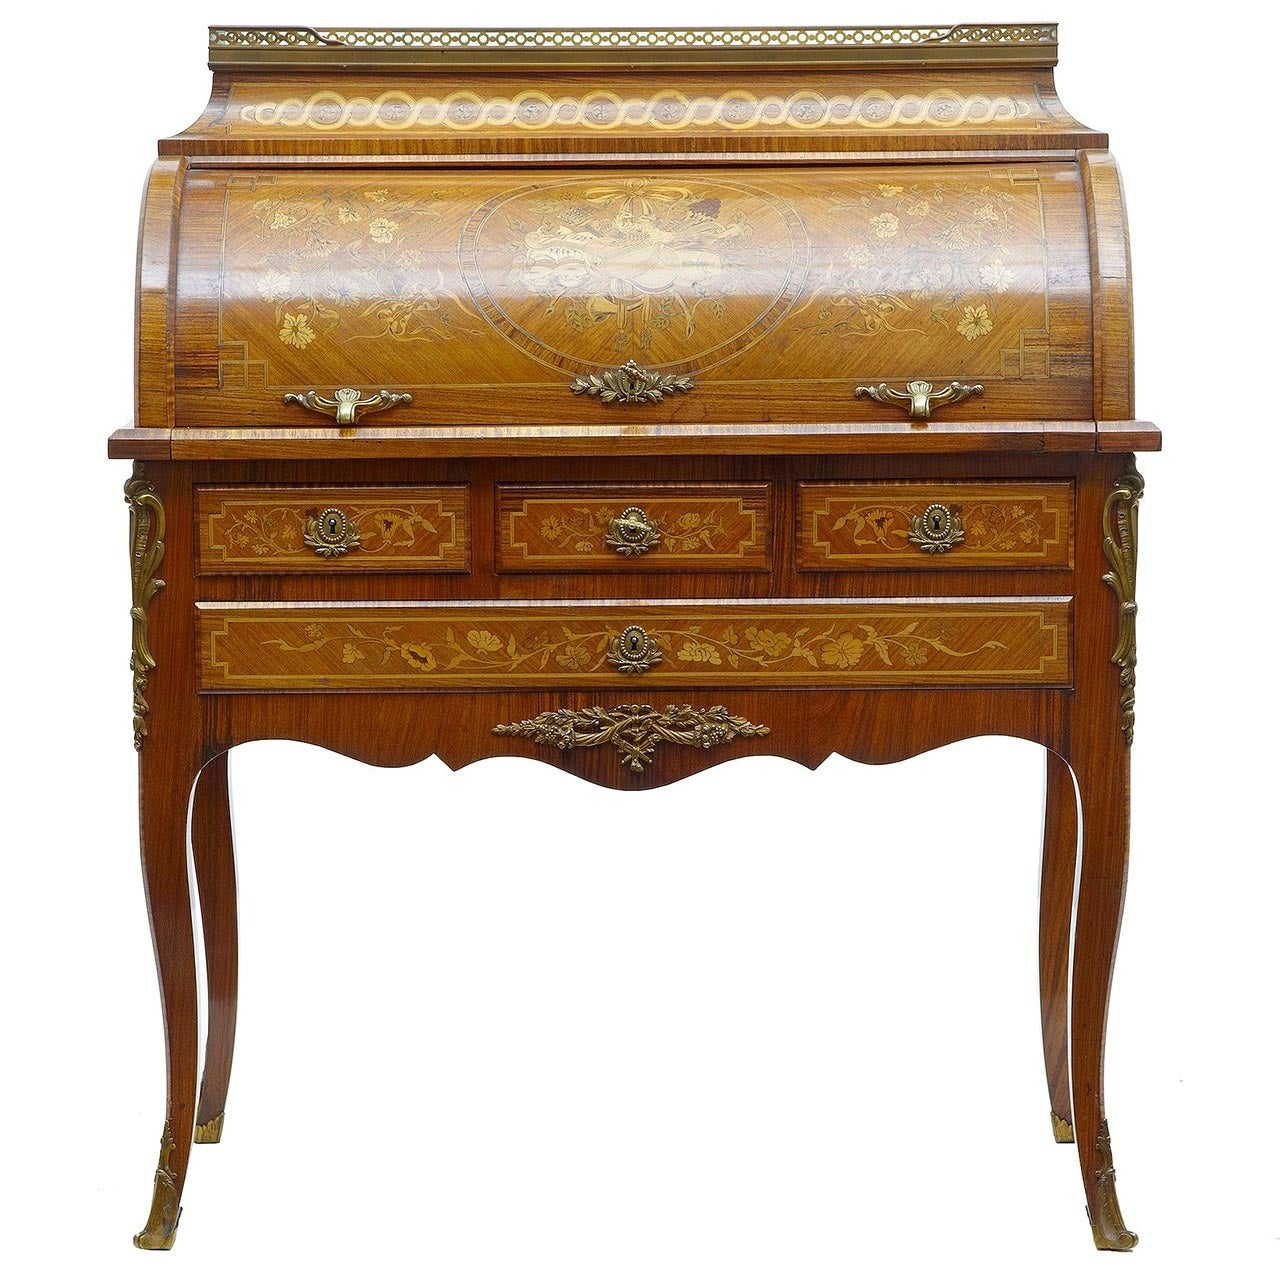 19th Century Louis XV Influenced Inlaid Mahogany Ladies Writing Desk